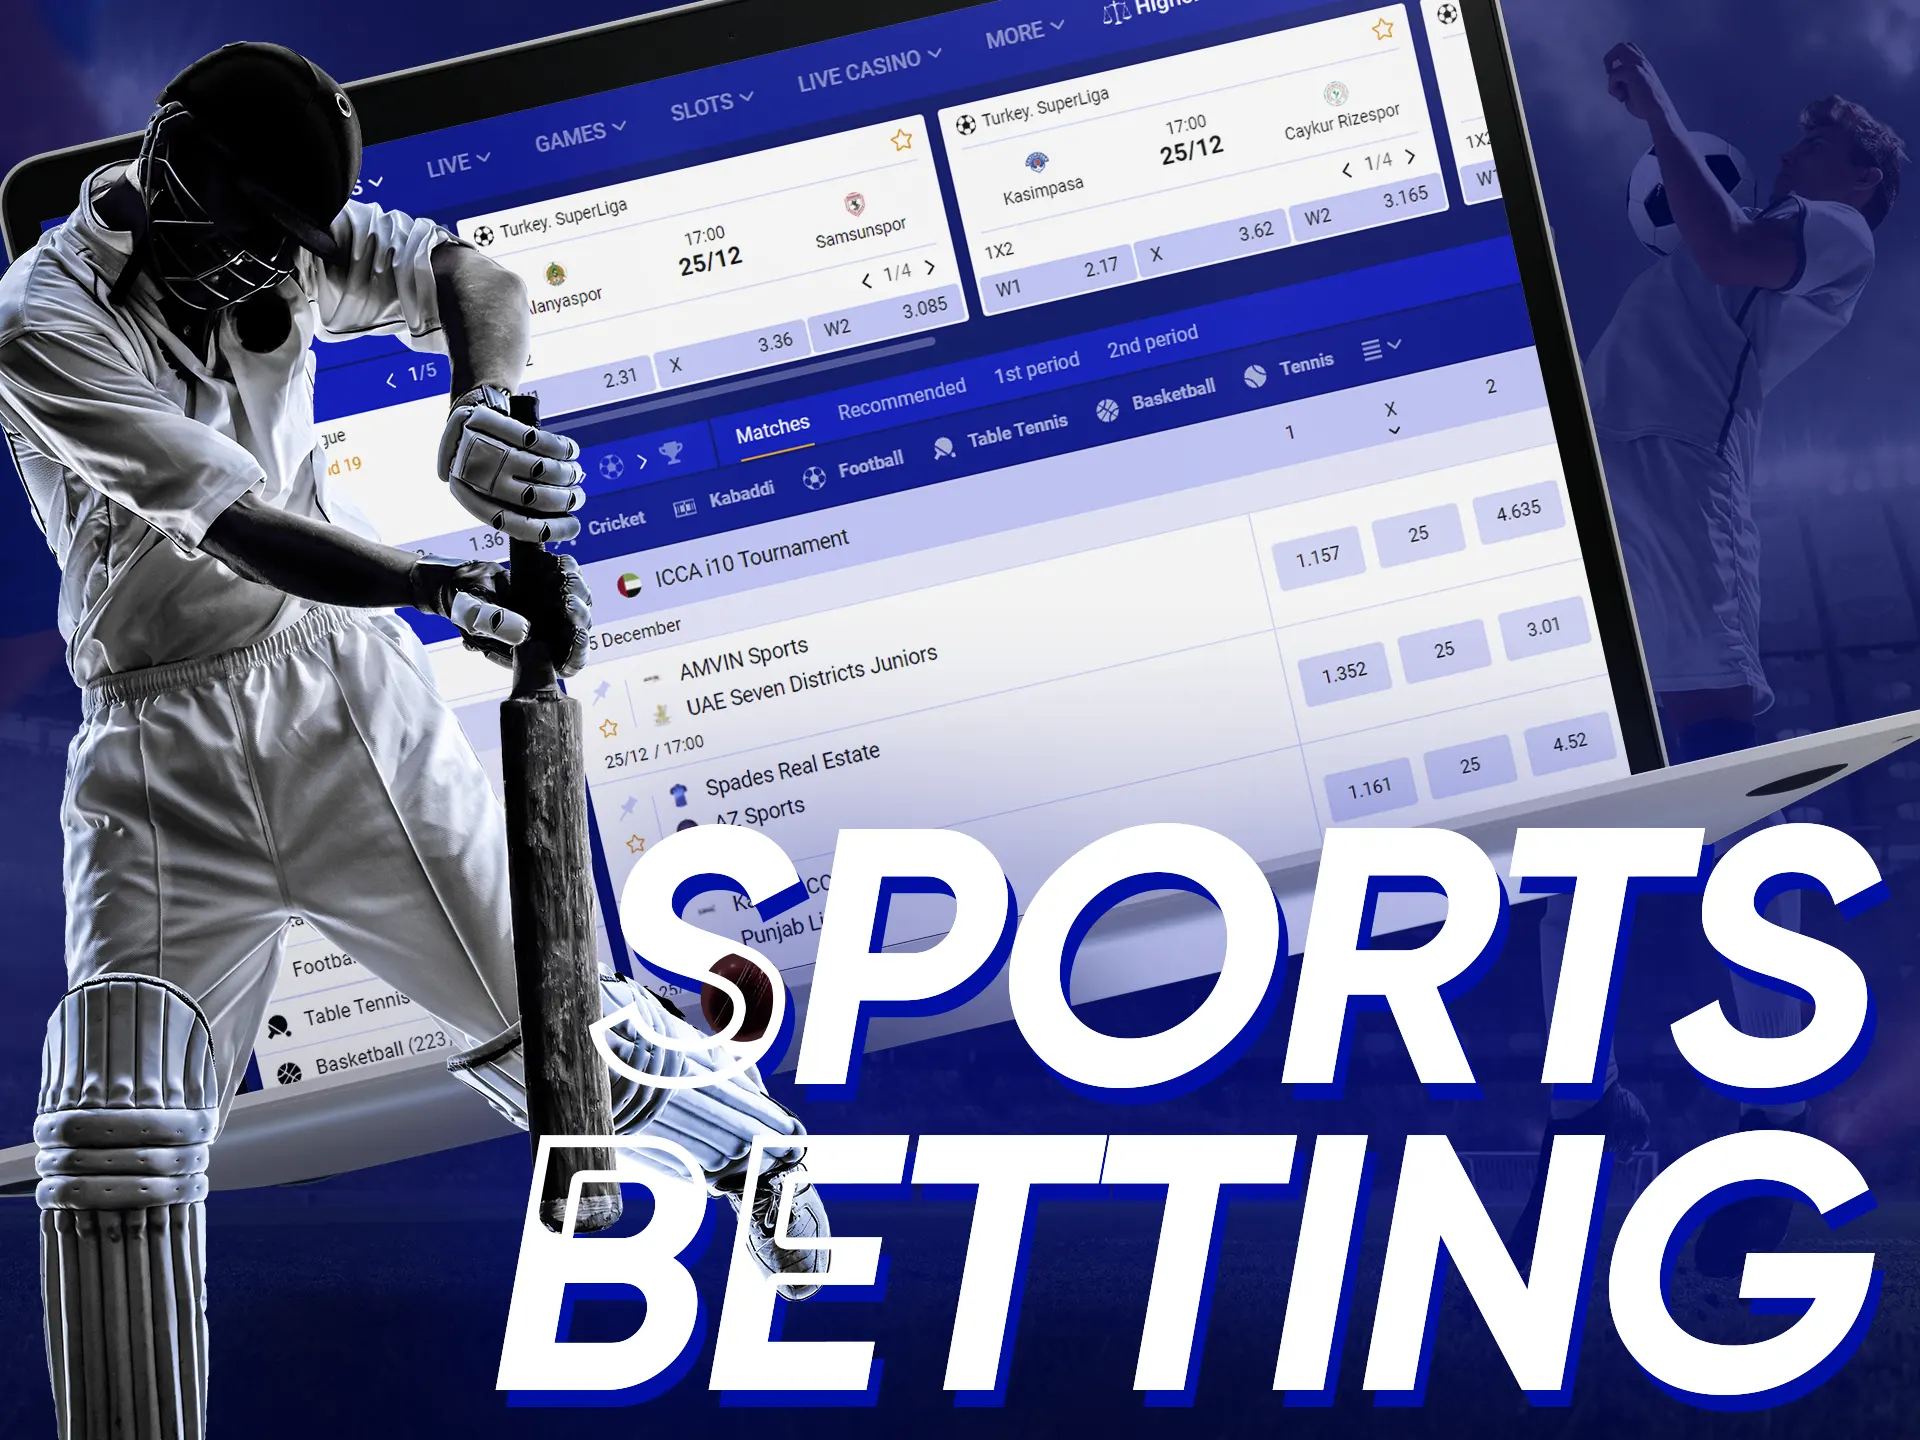 Paripesa allows betting on UEFA, Premier League, tennis, politics, and various sports.